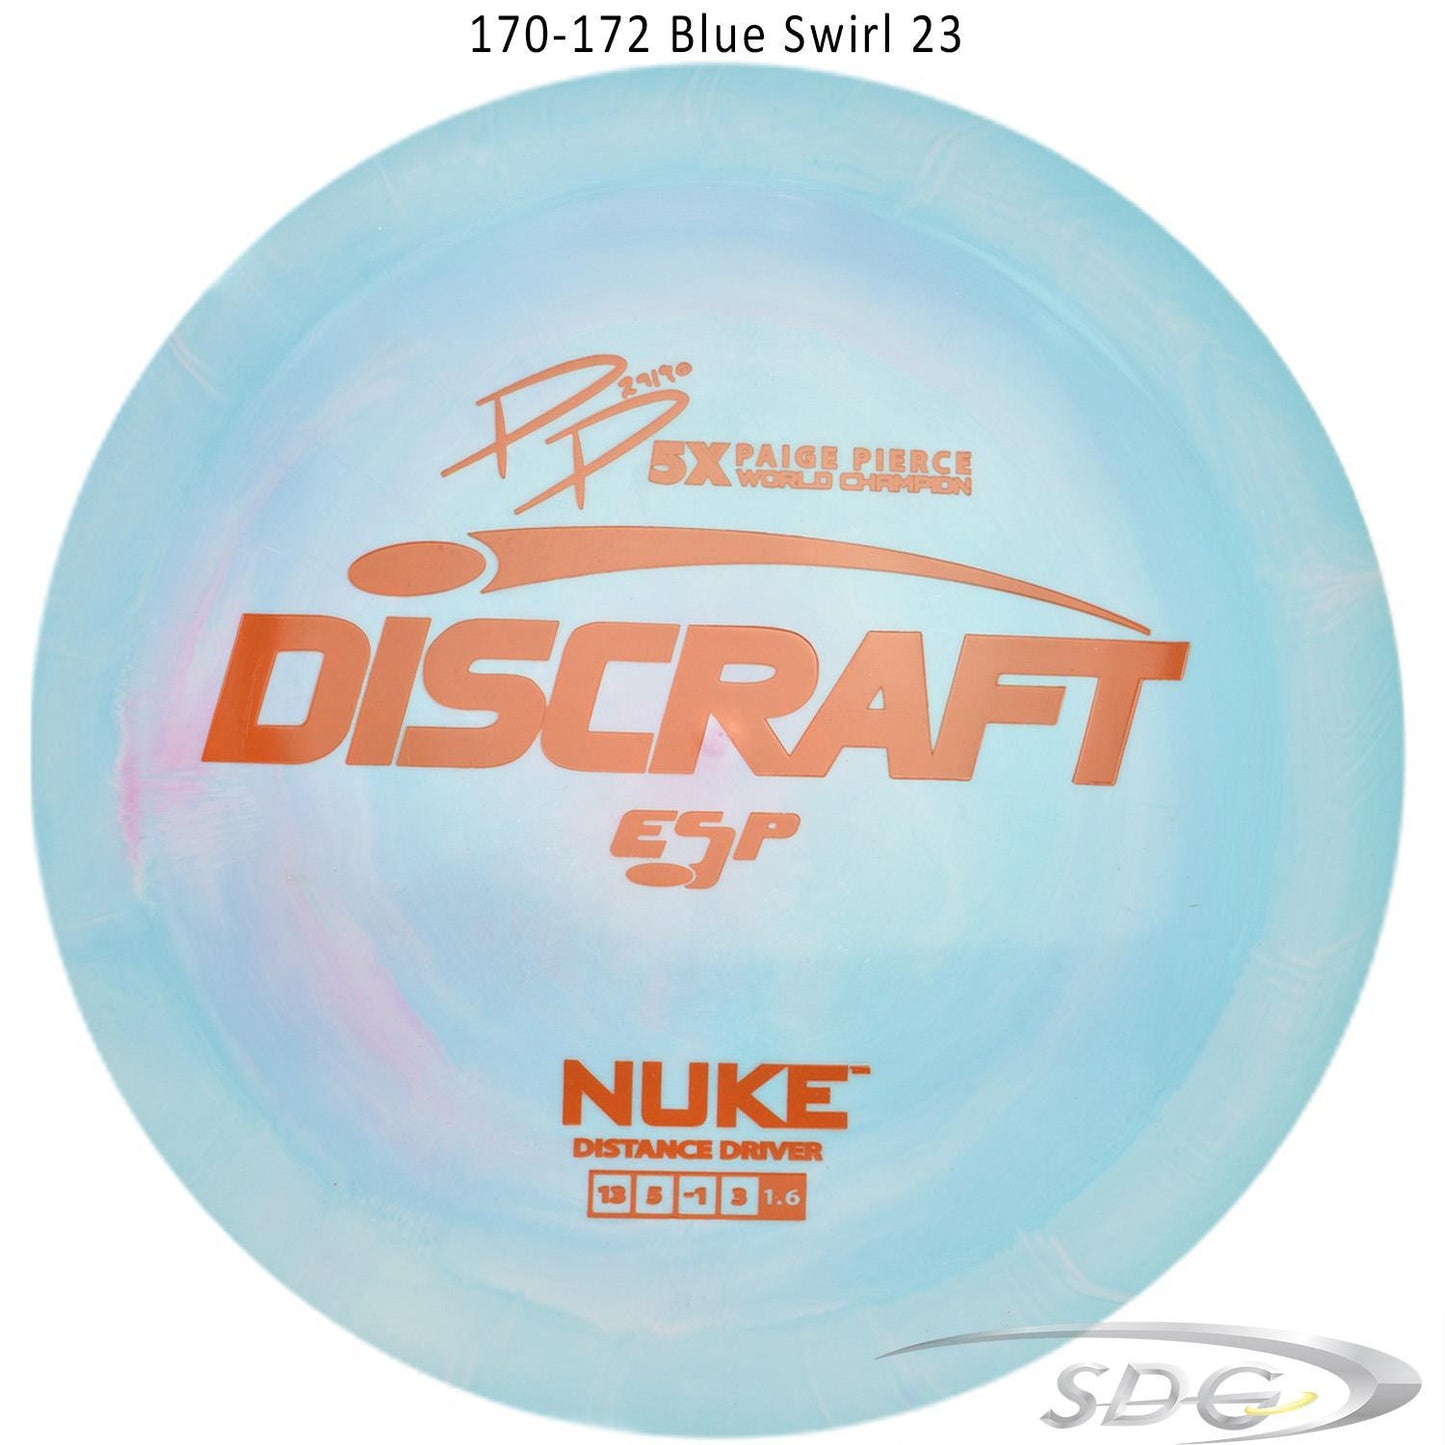 discraft-esp-nuke-paige-pierce-signature-disc-golf-distance-driver 170-172 Blue Swirl 23